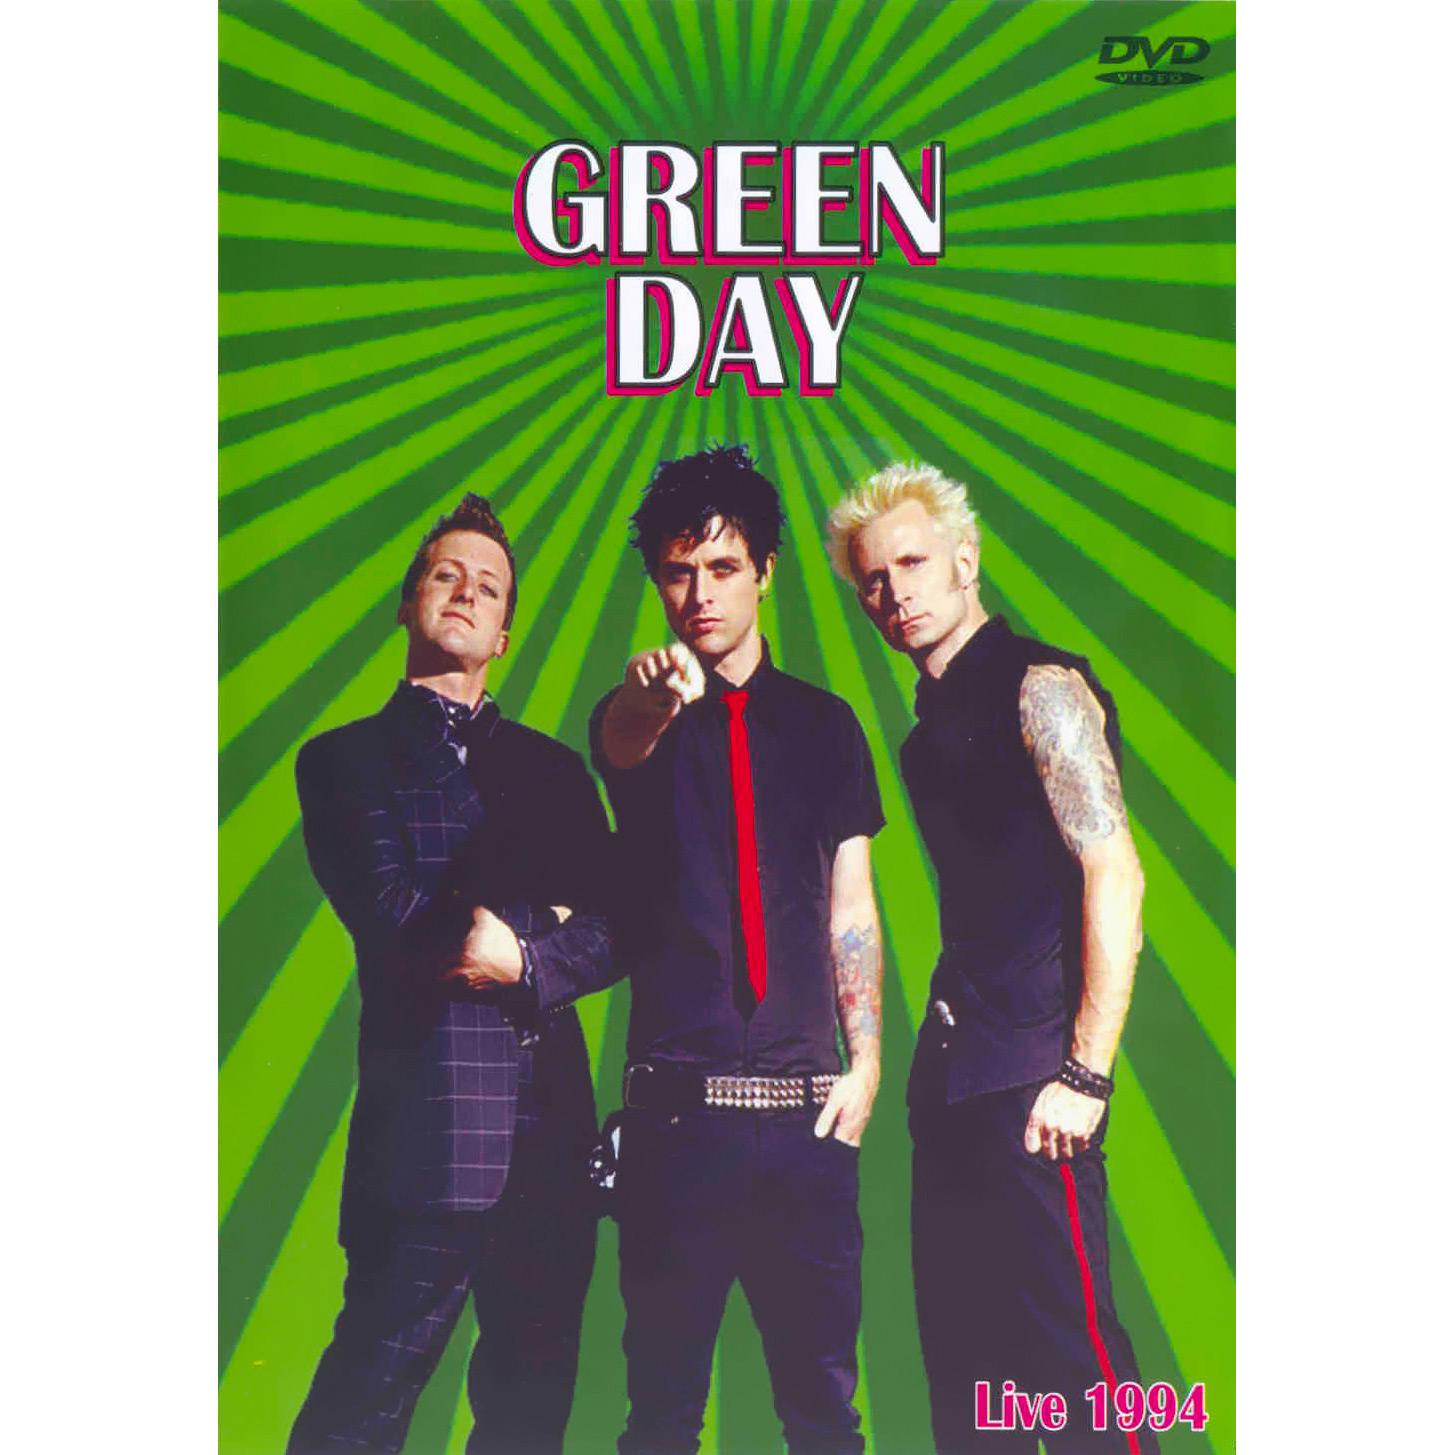 DVD - Green Day é bom? Vale a pena?